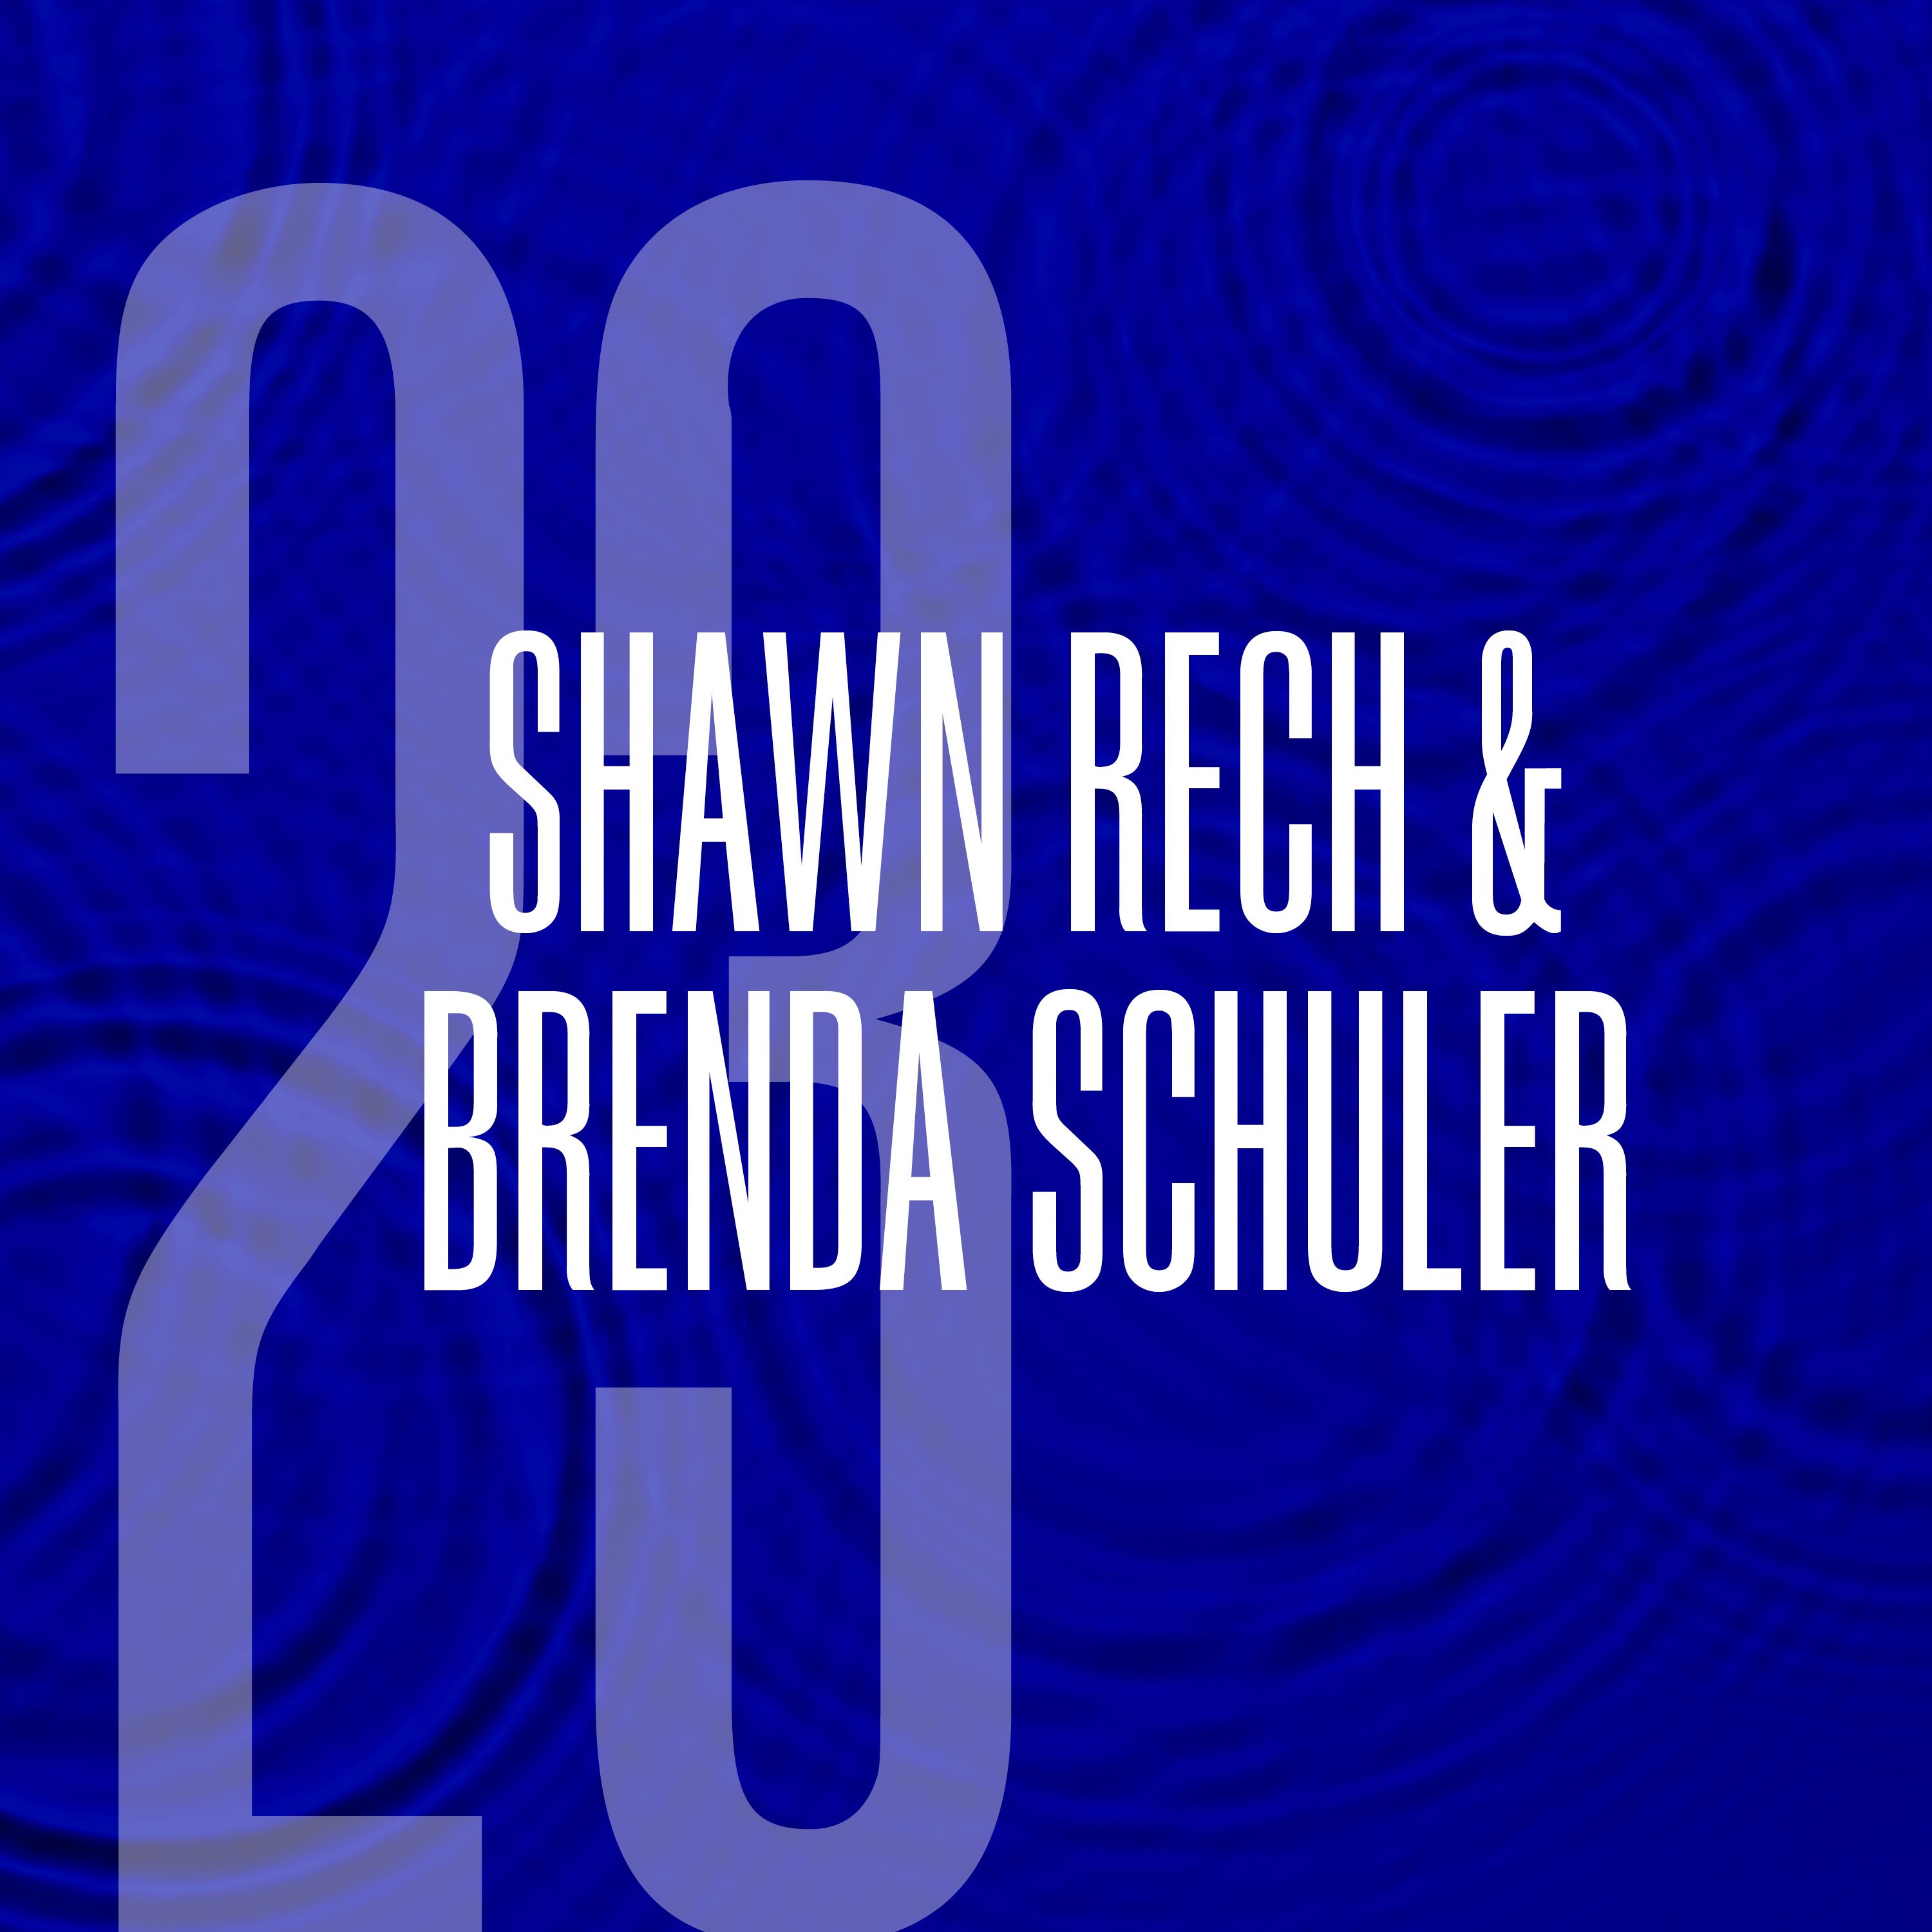 23: Shawn Rech and Brenda Schuler: Convicting a Murderer